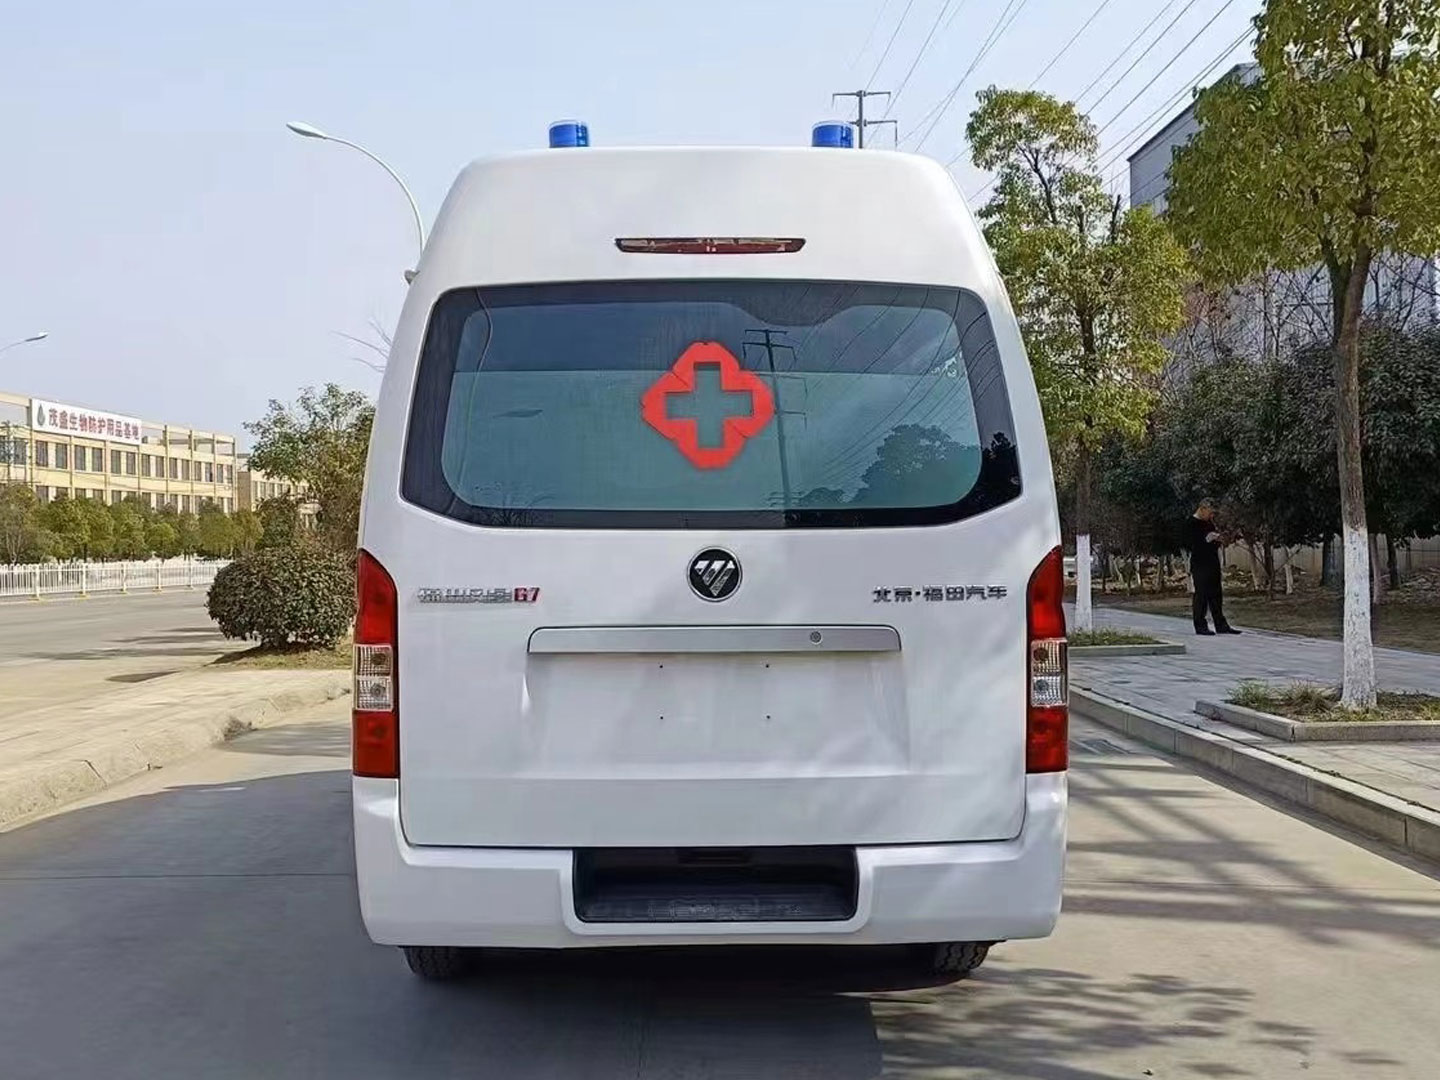 Equipo de ambulancia FOTON G7 Ven Tilator Nuevo coche de ambulancia médica